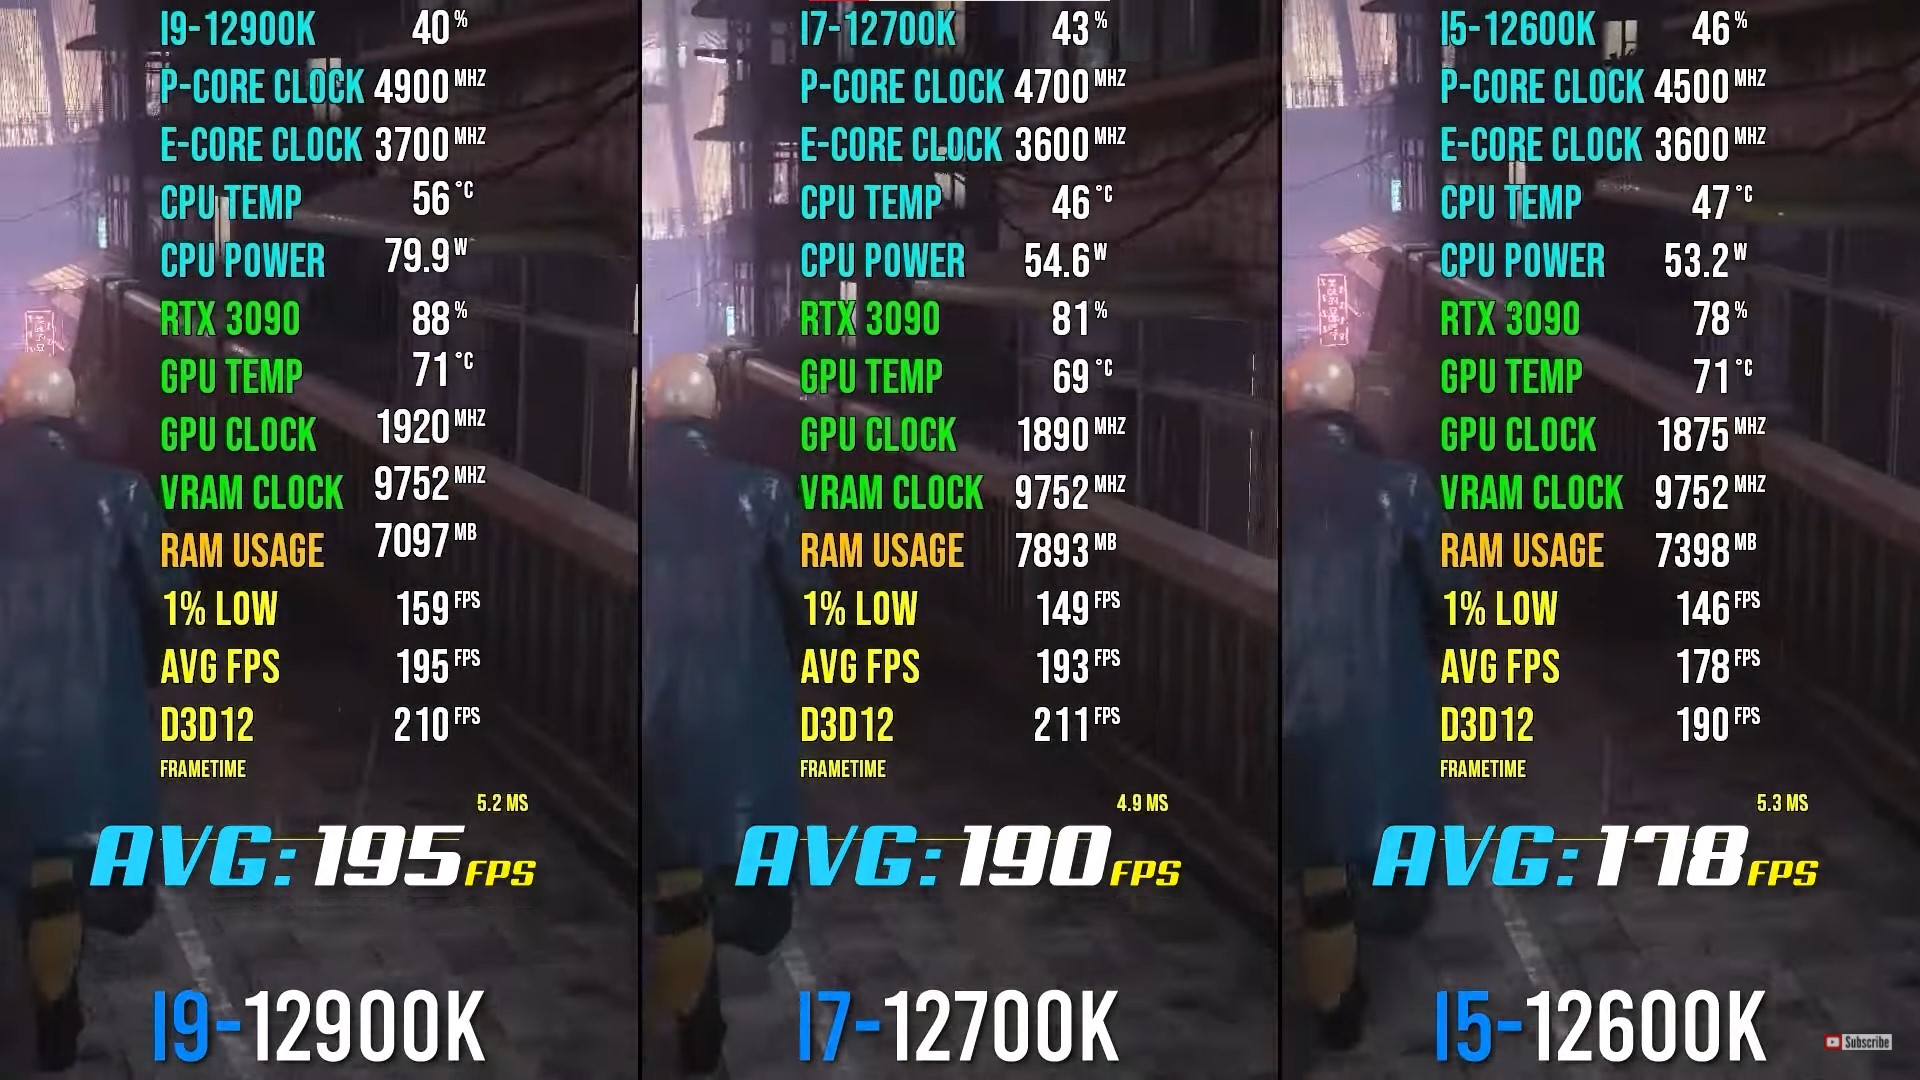 Hitman 3 performance with intel 12900k vs 12700k vs 12600k processors.